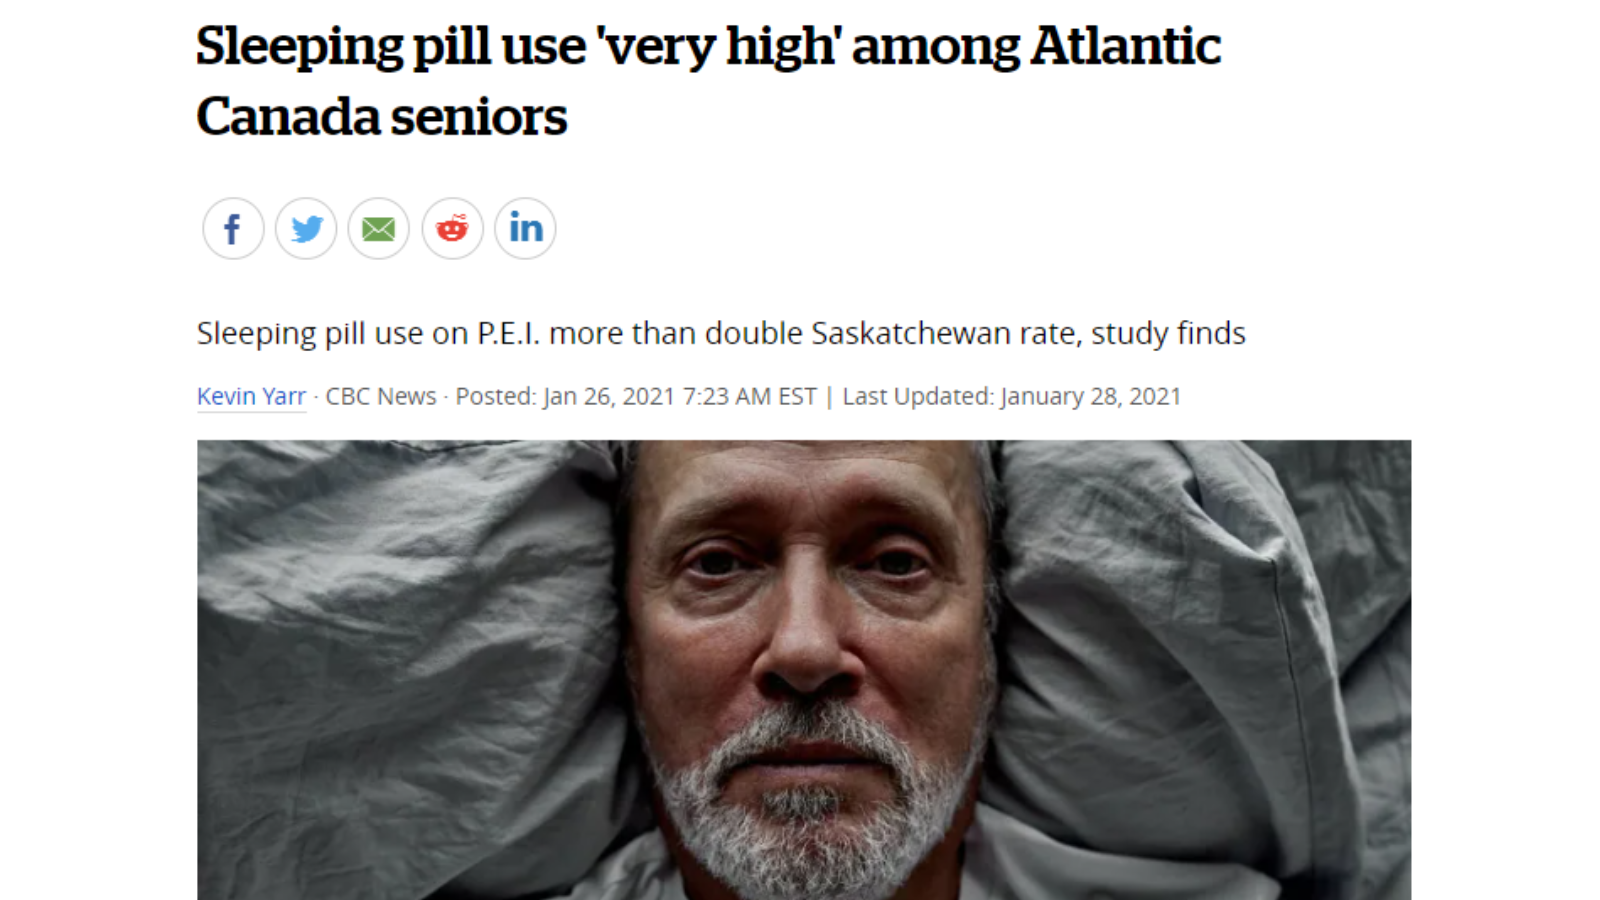 Sleeping pill use 'very high' among Atlantic Canada seniors - Sleeping pill use on P.E.I. more than double Saskatchewan rate, study finds